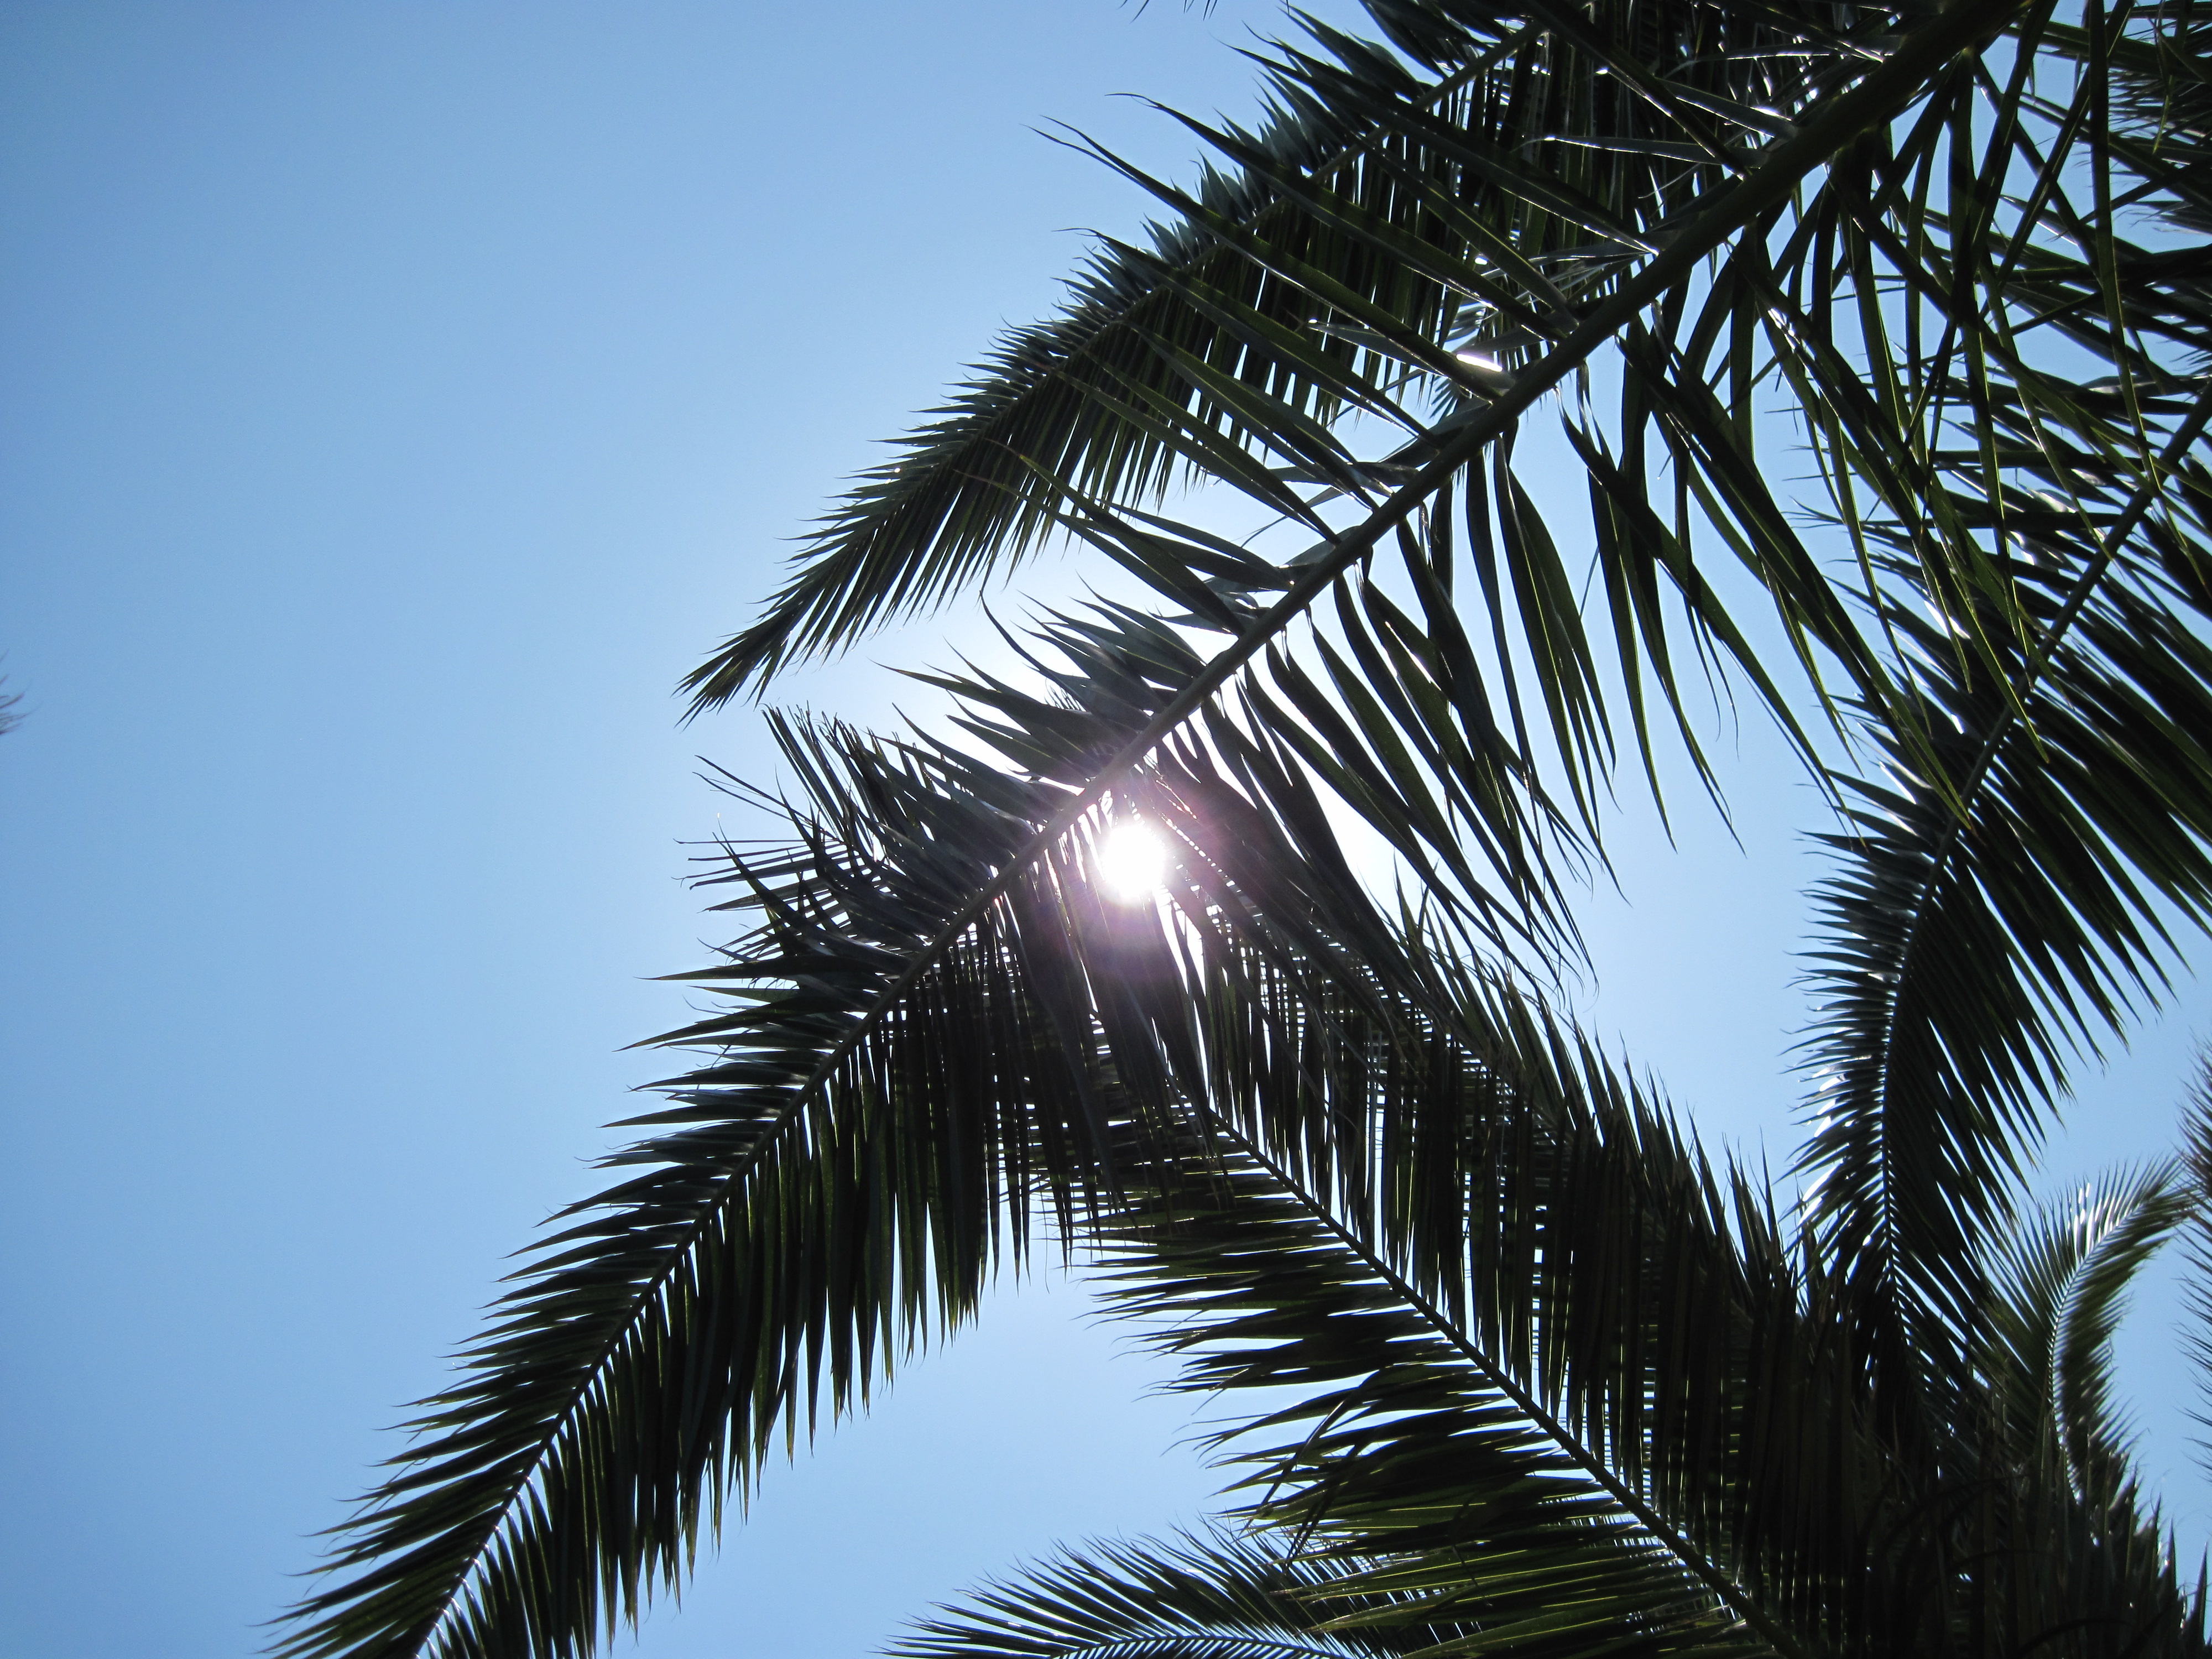 Under the palm tree photo